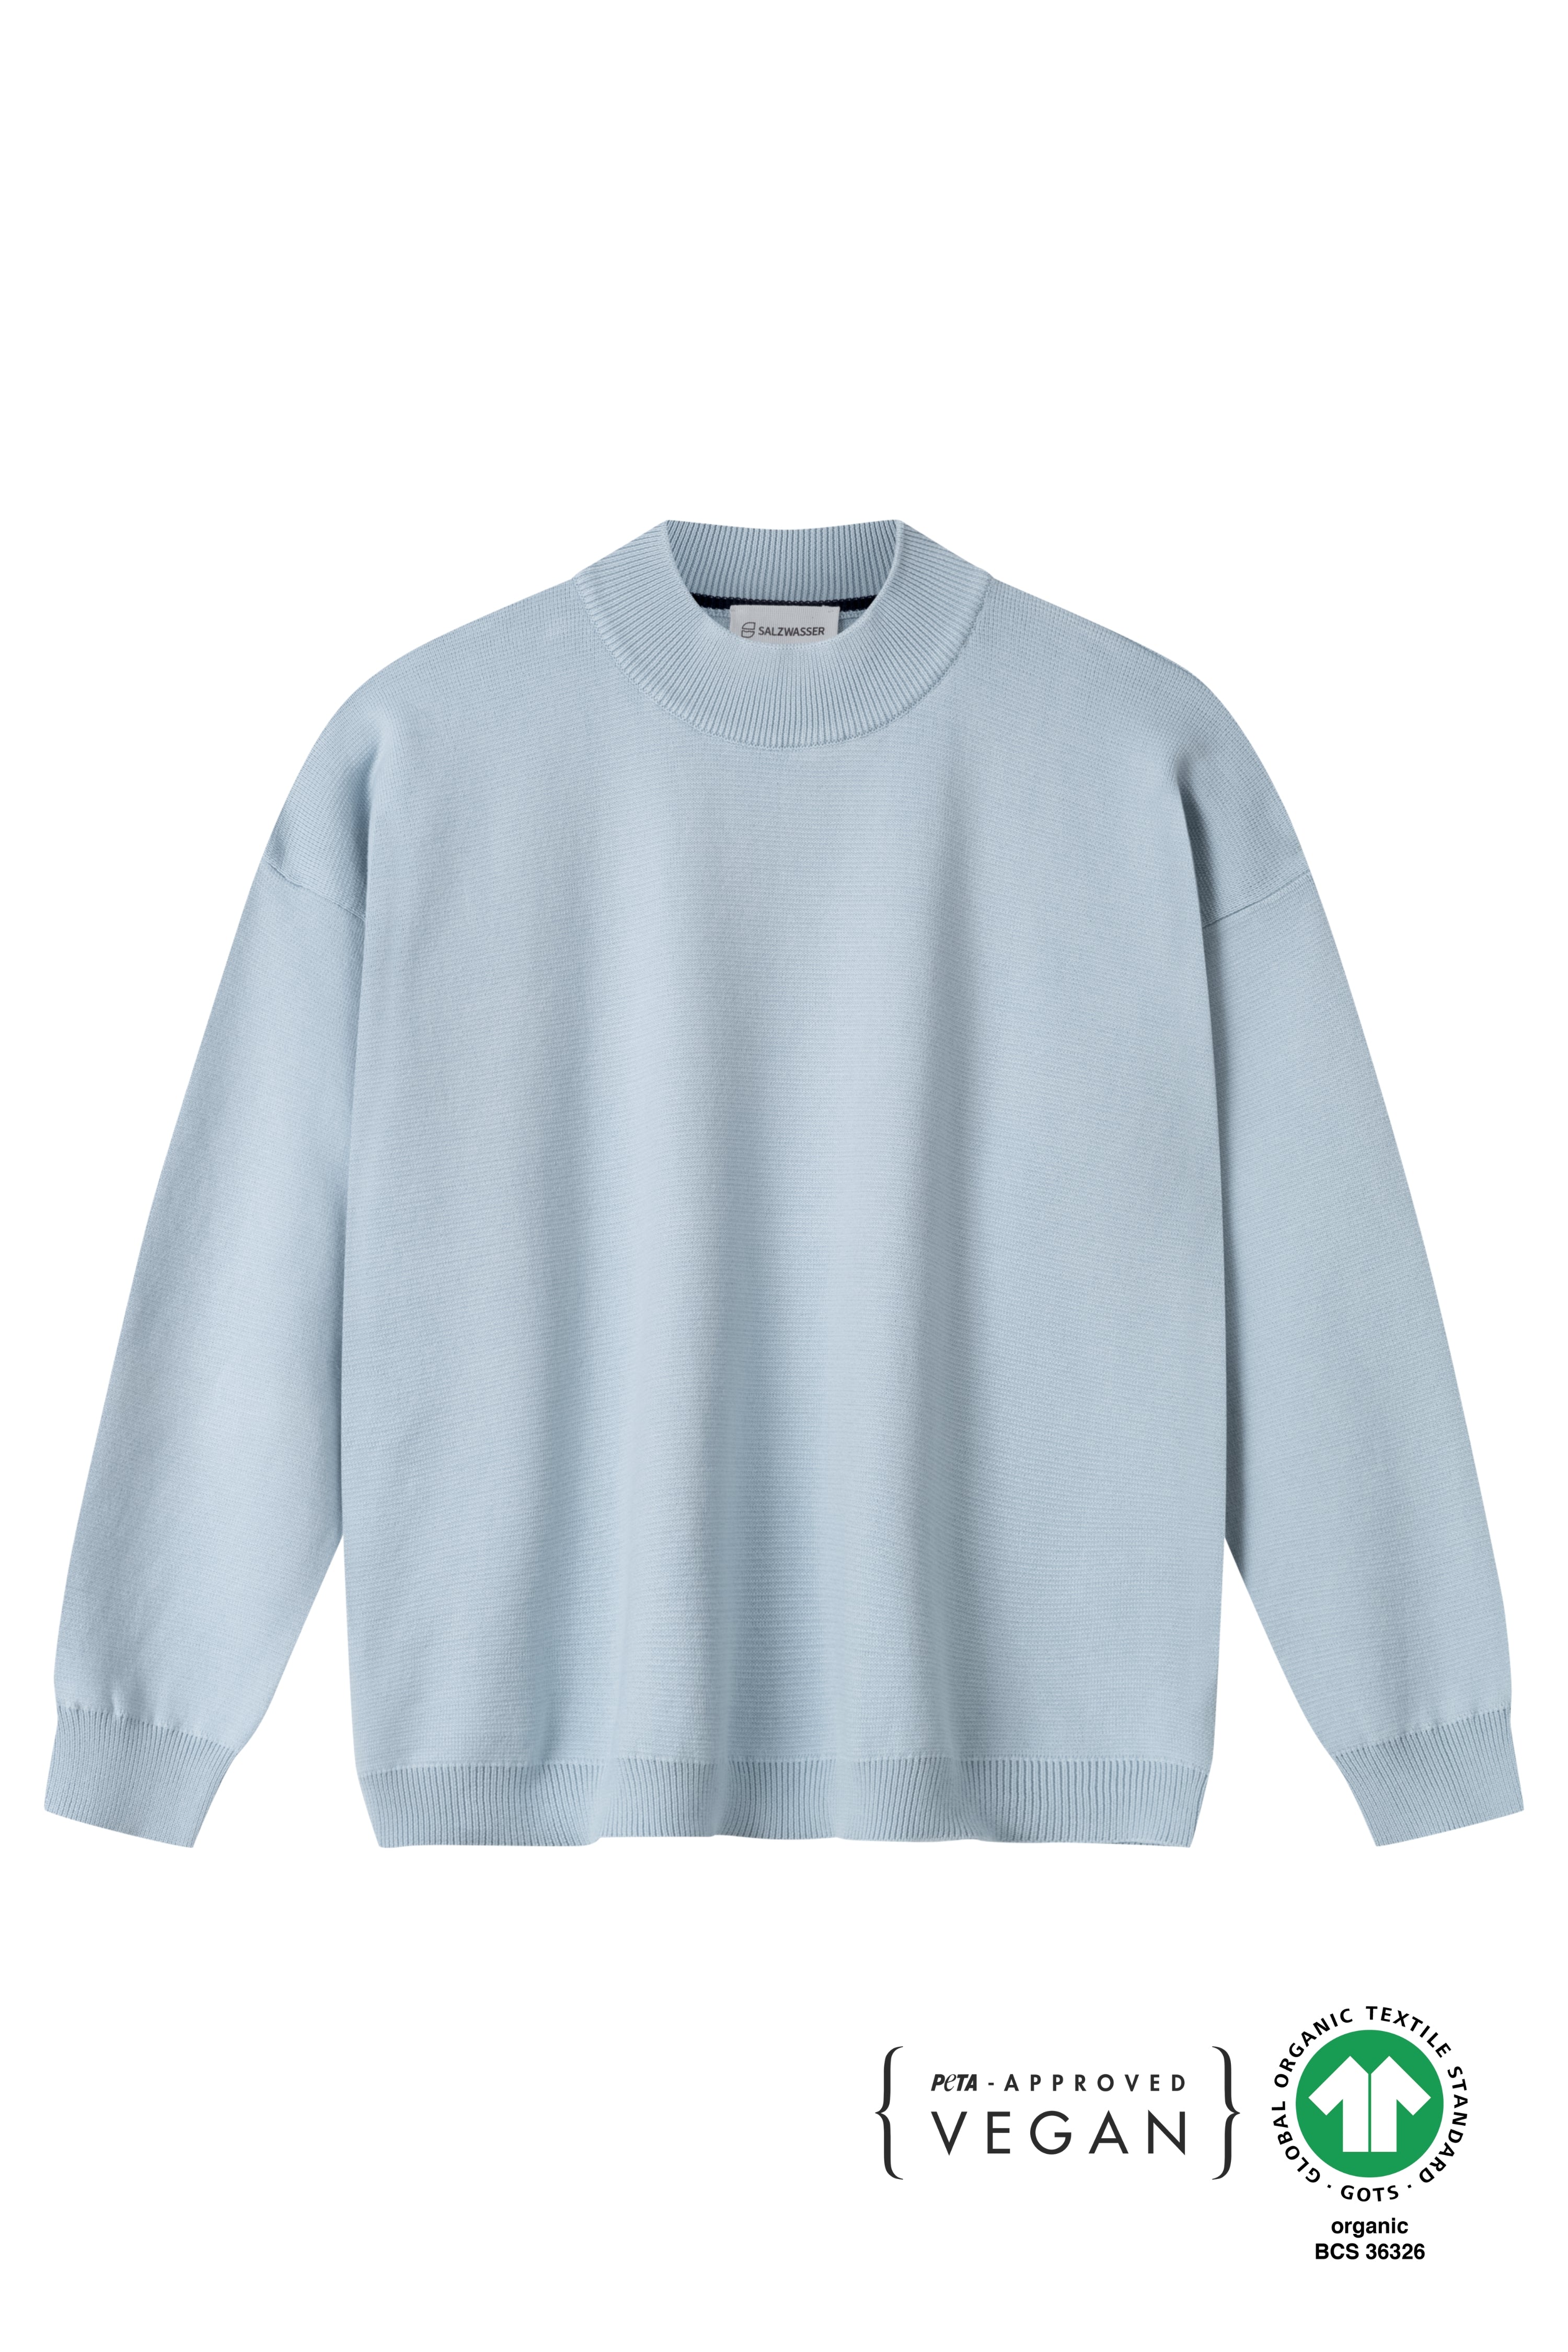 Light blue knitted sweater Marina made of 100% organic cotton by Salzwasser